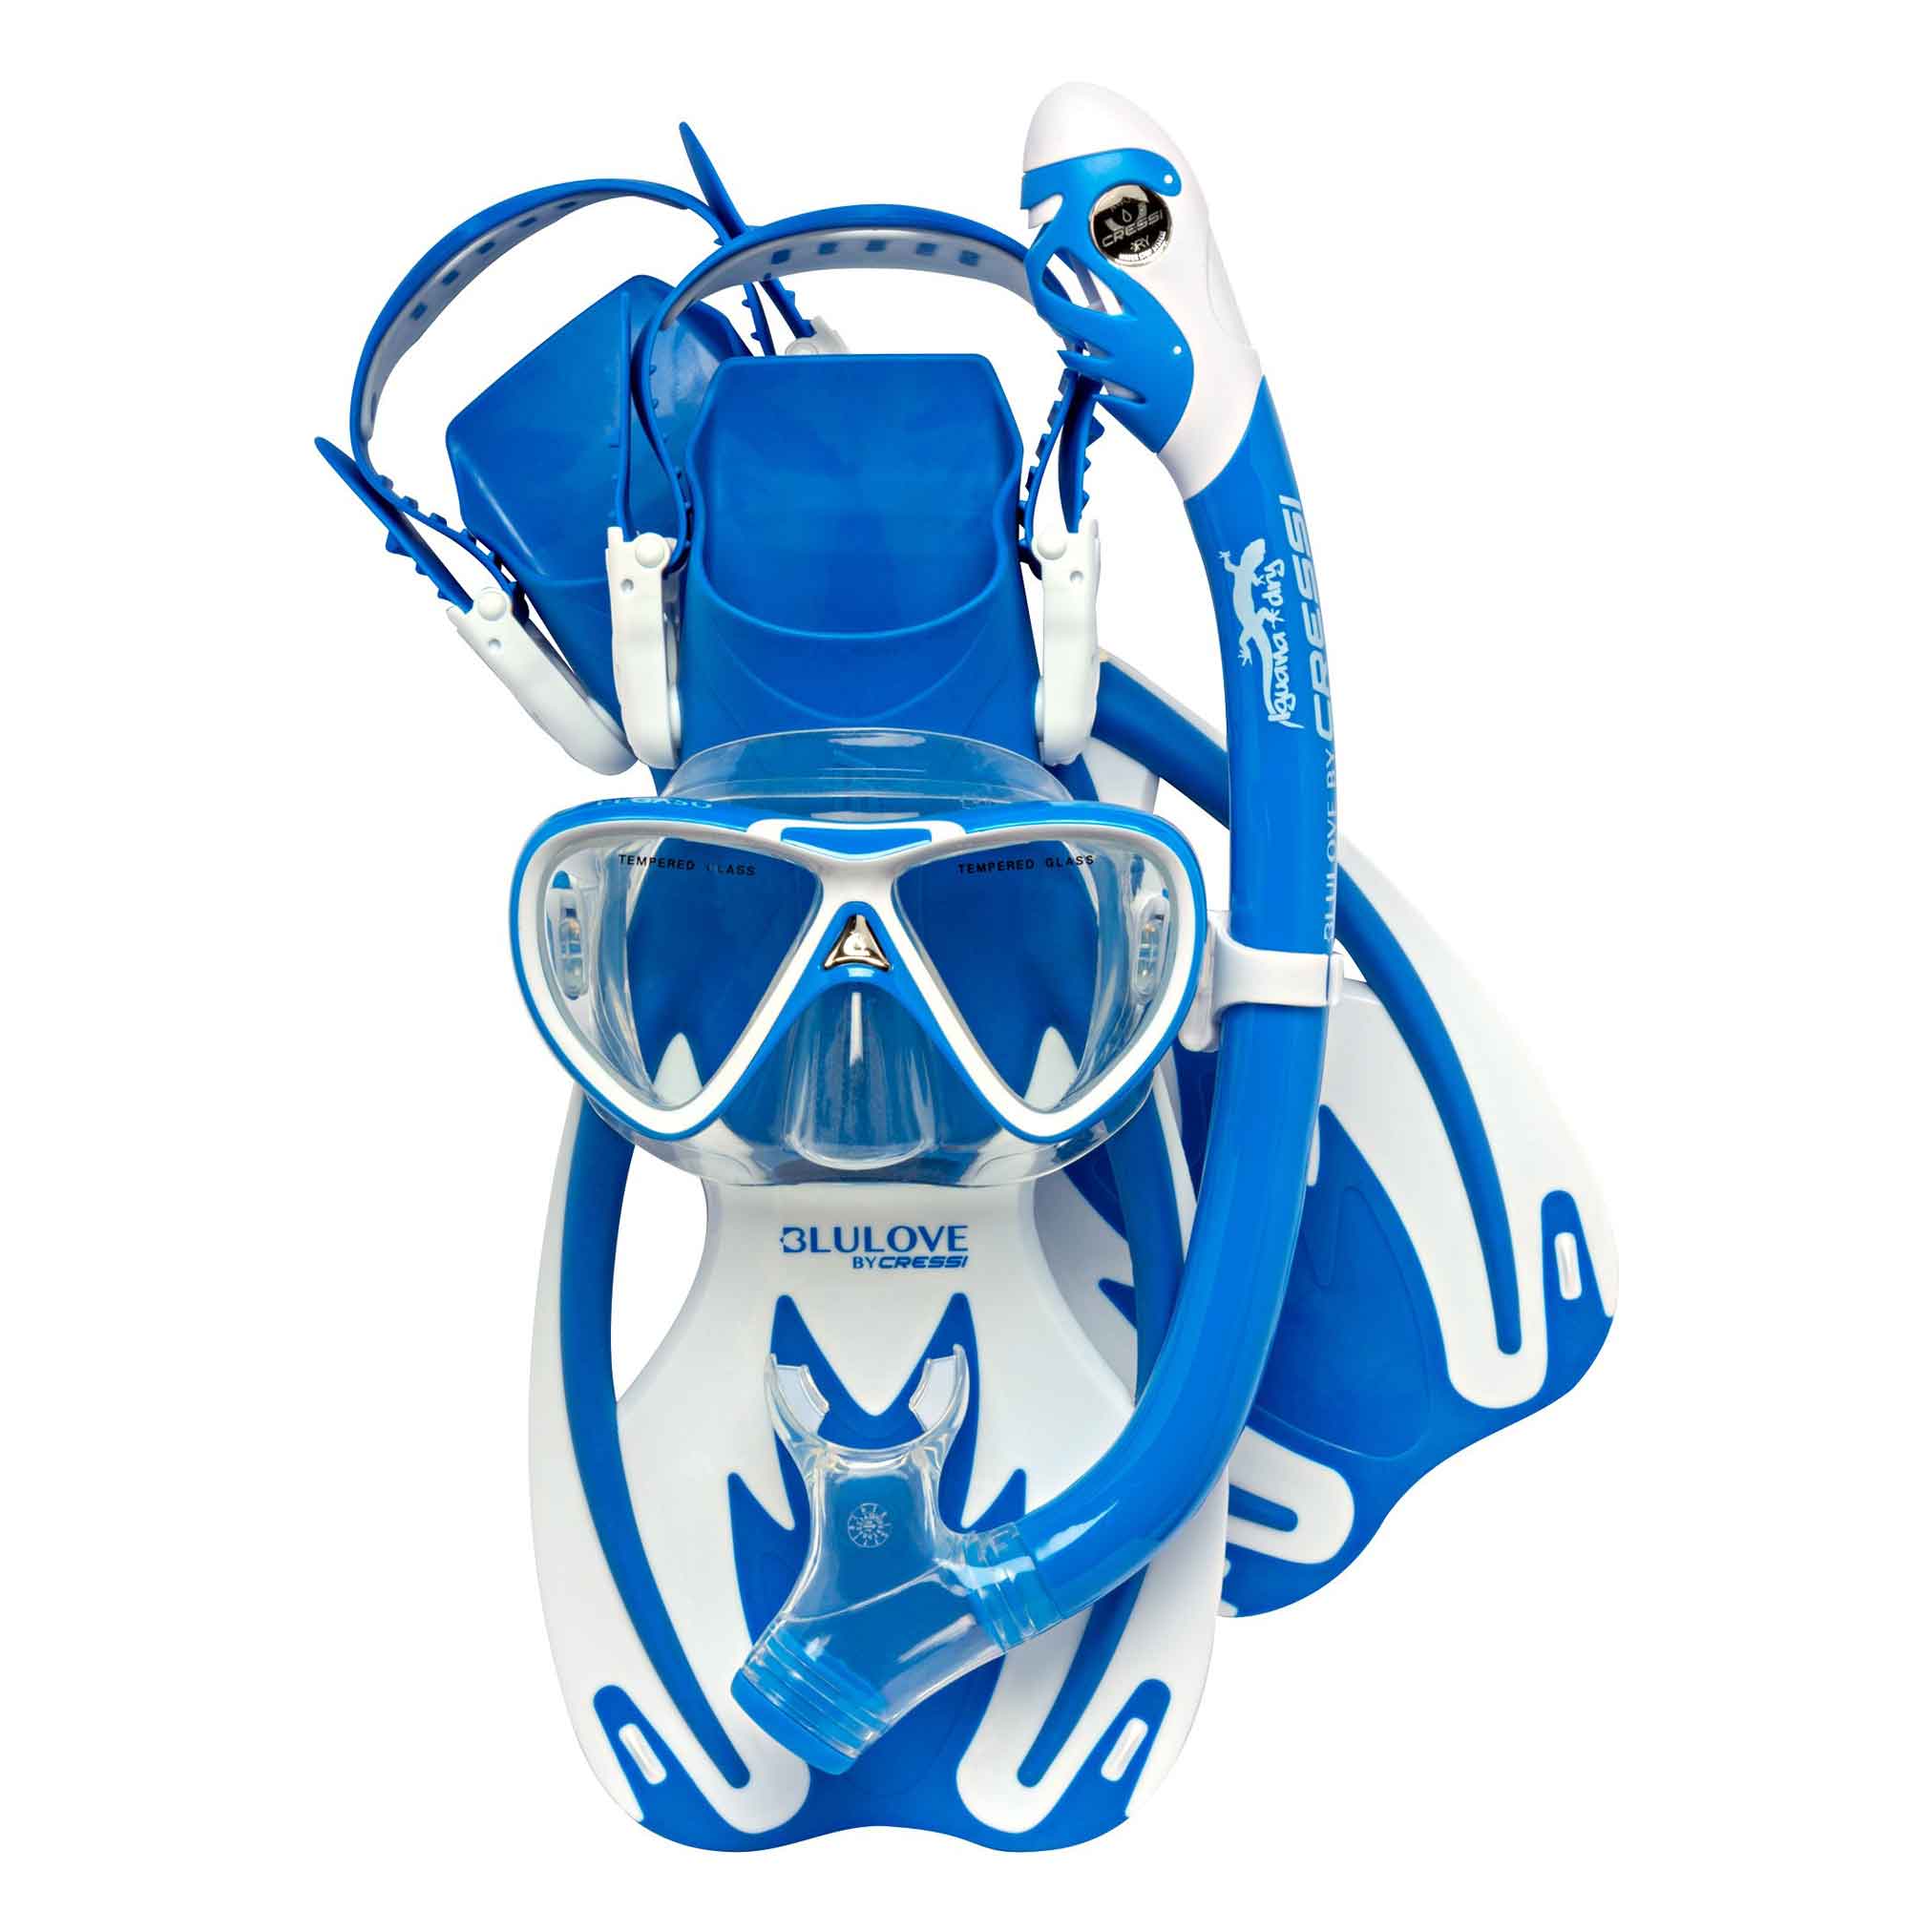 Deluxe Snorkeling Gear Scuba Diving Fins Mask Dry Snorkel Set